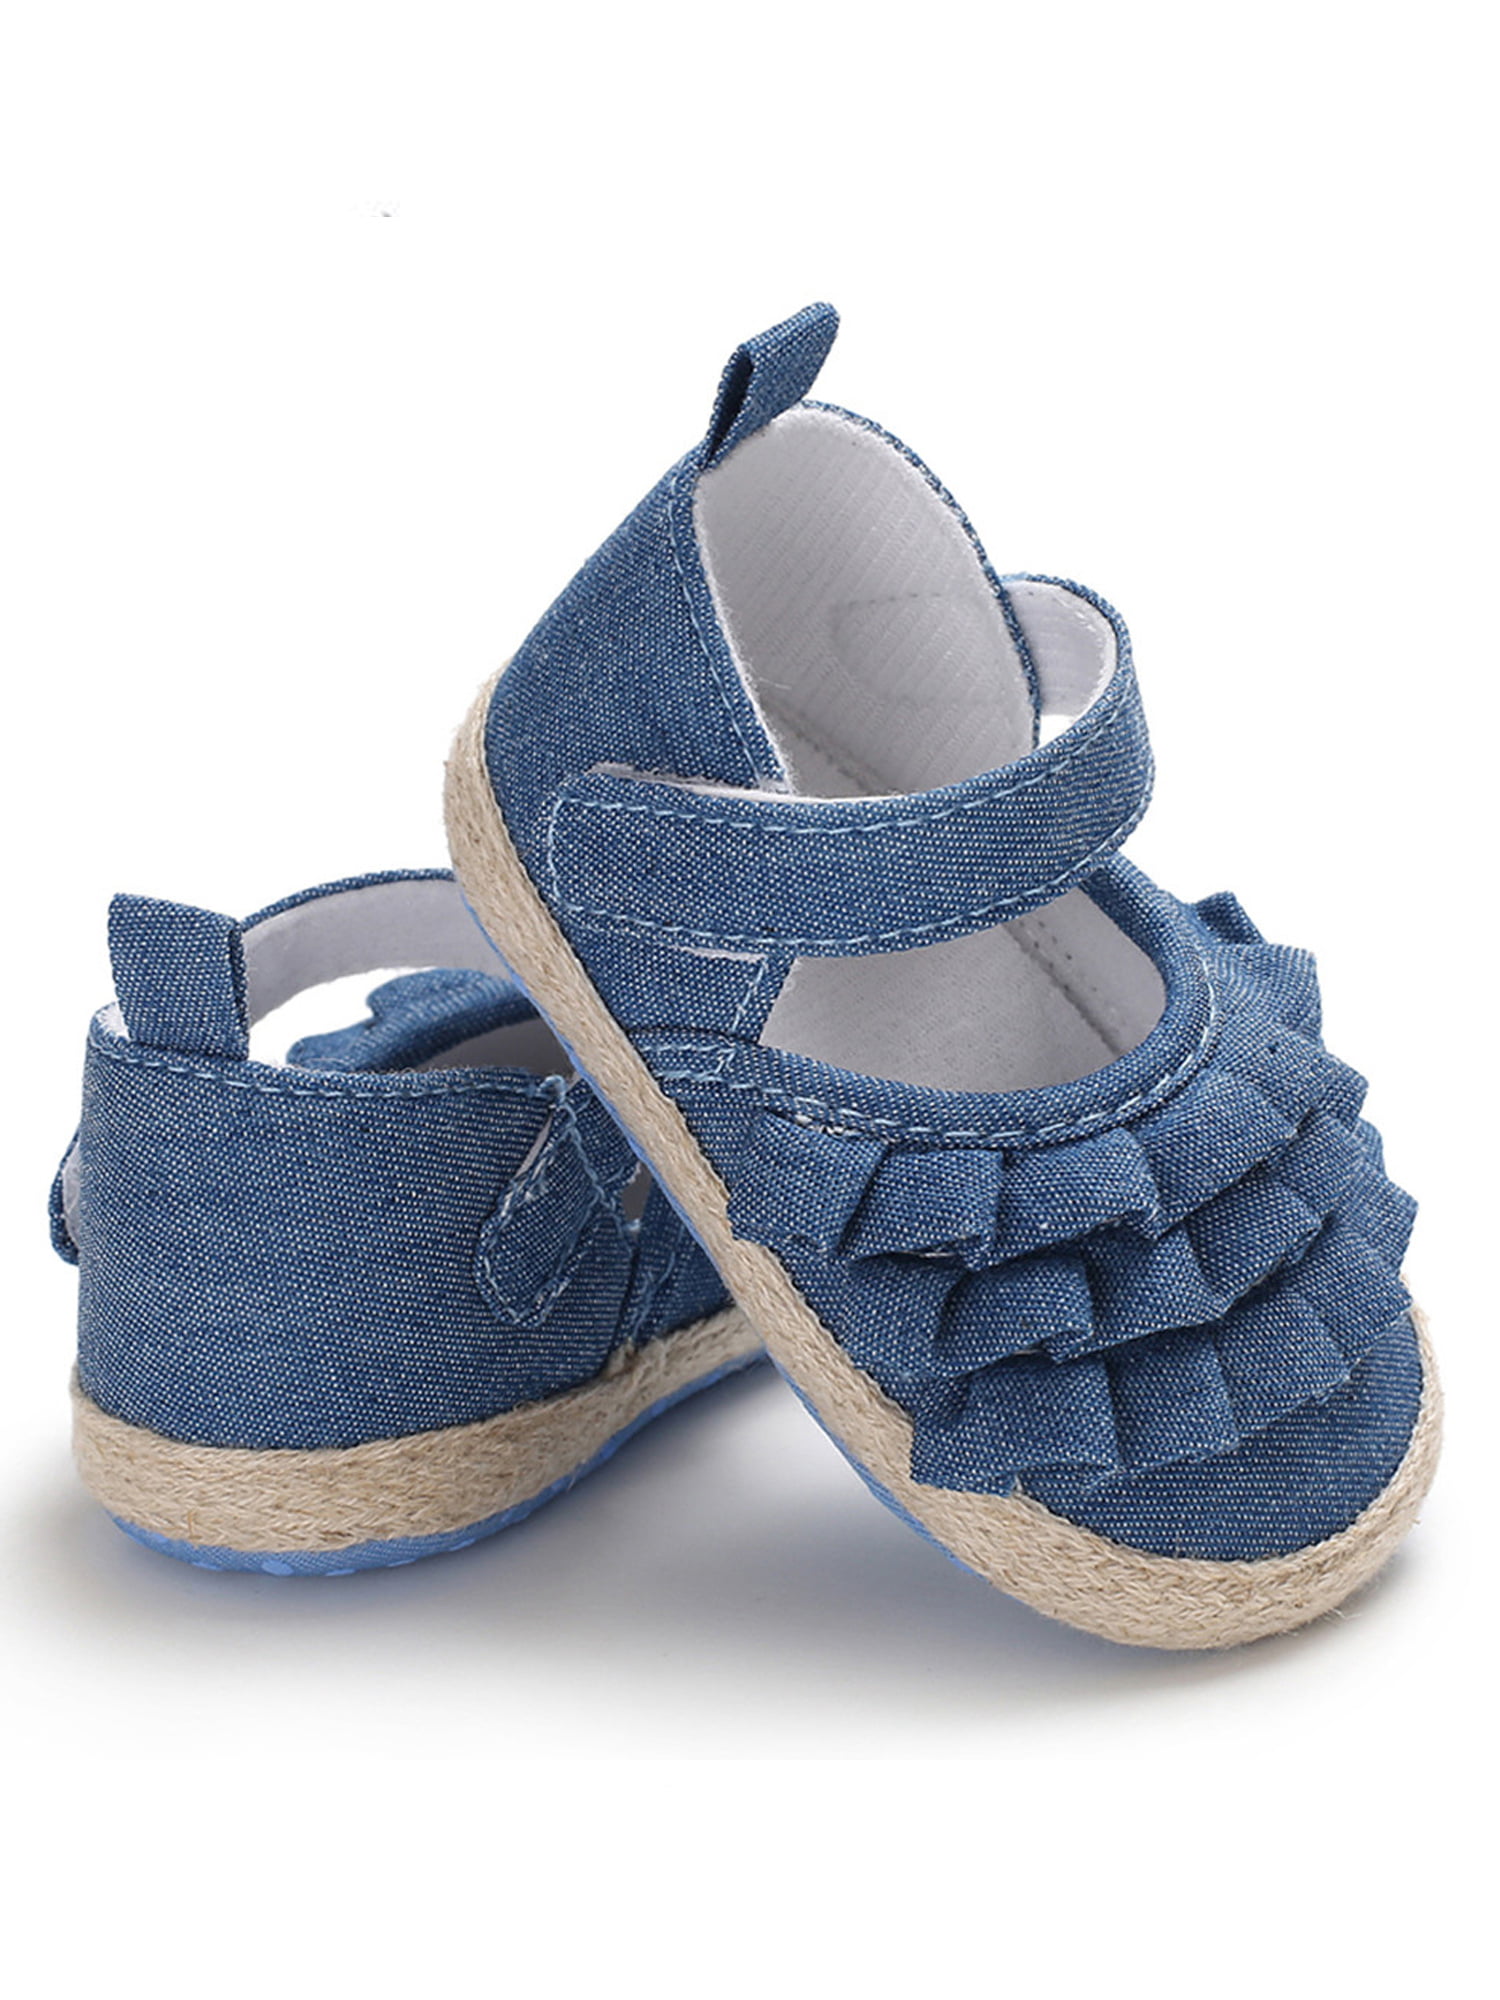 newborn shoes walmart